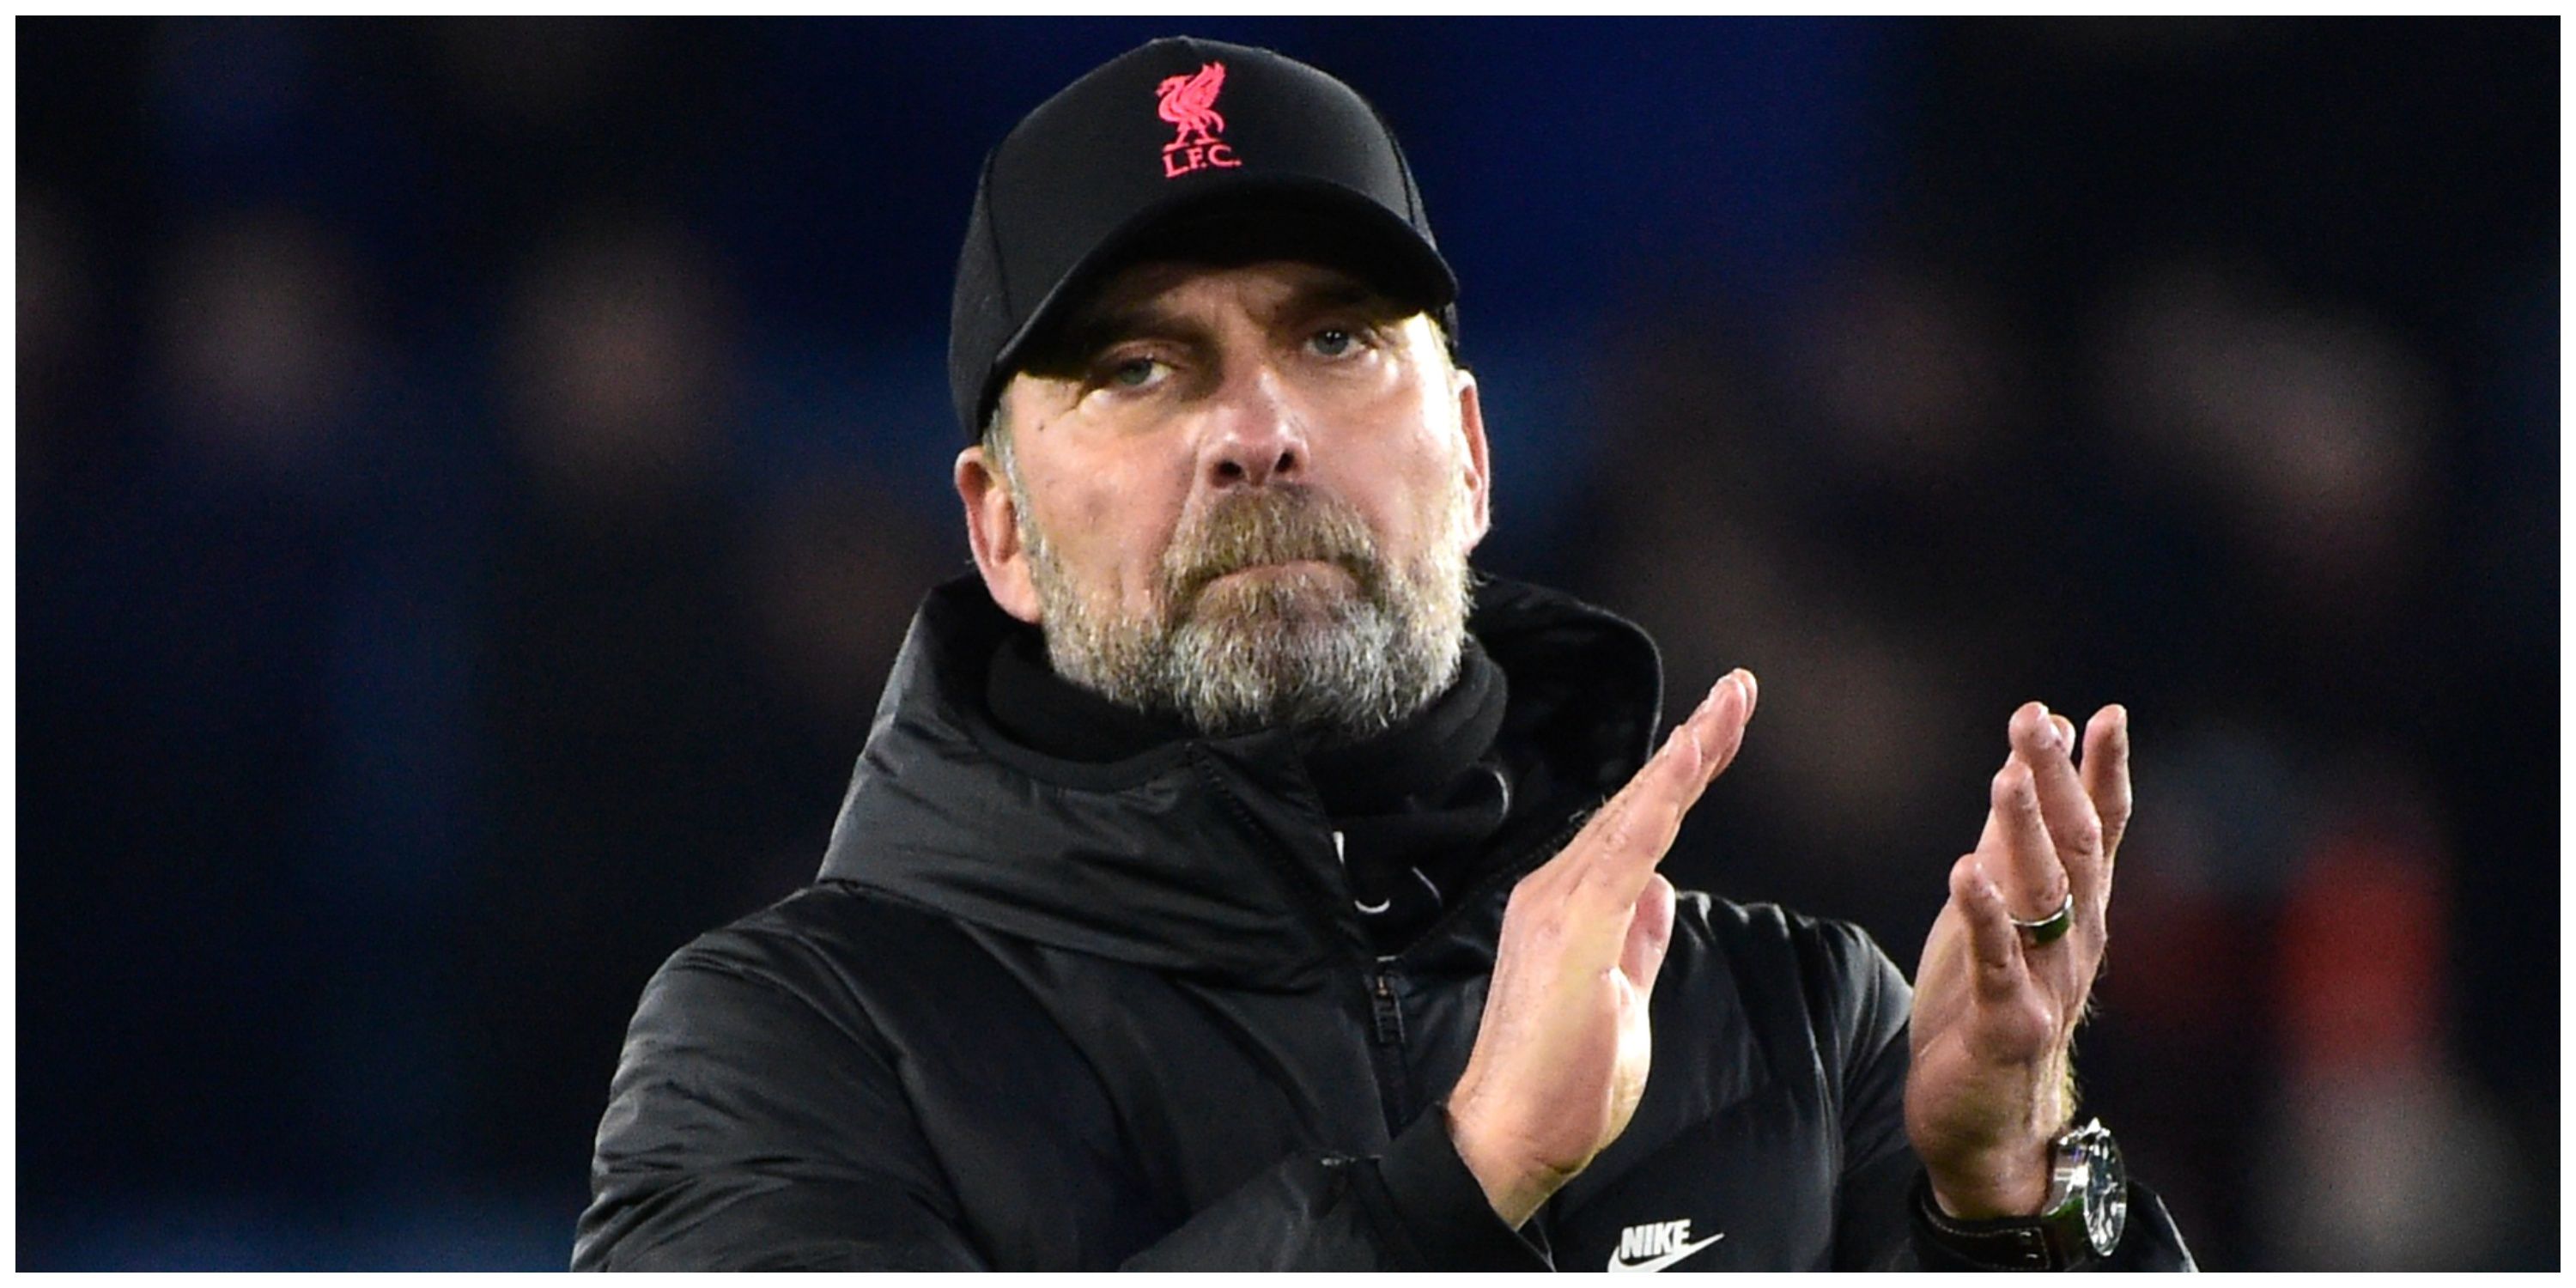 Liverpool manager Jurgen Klopp clapping